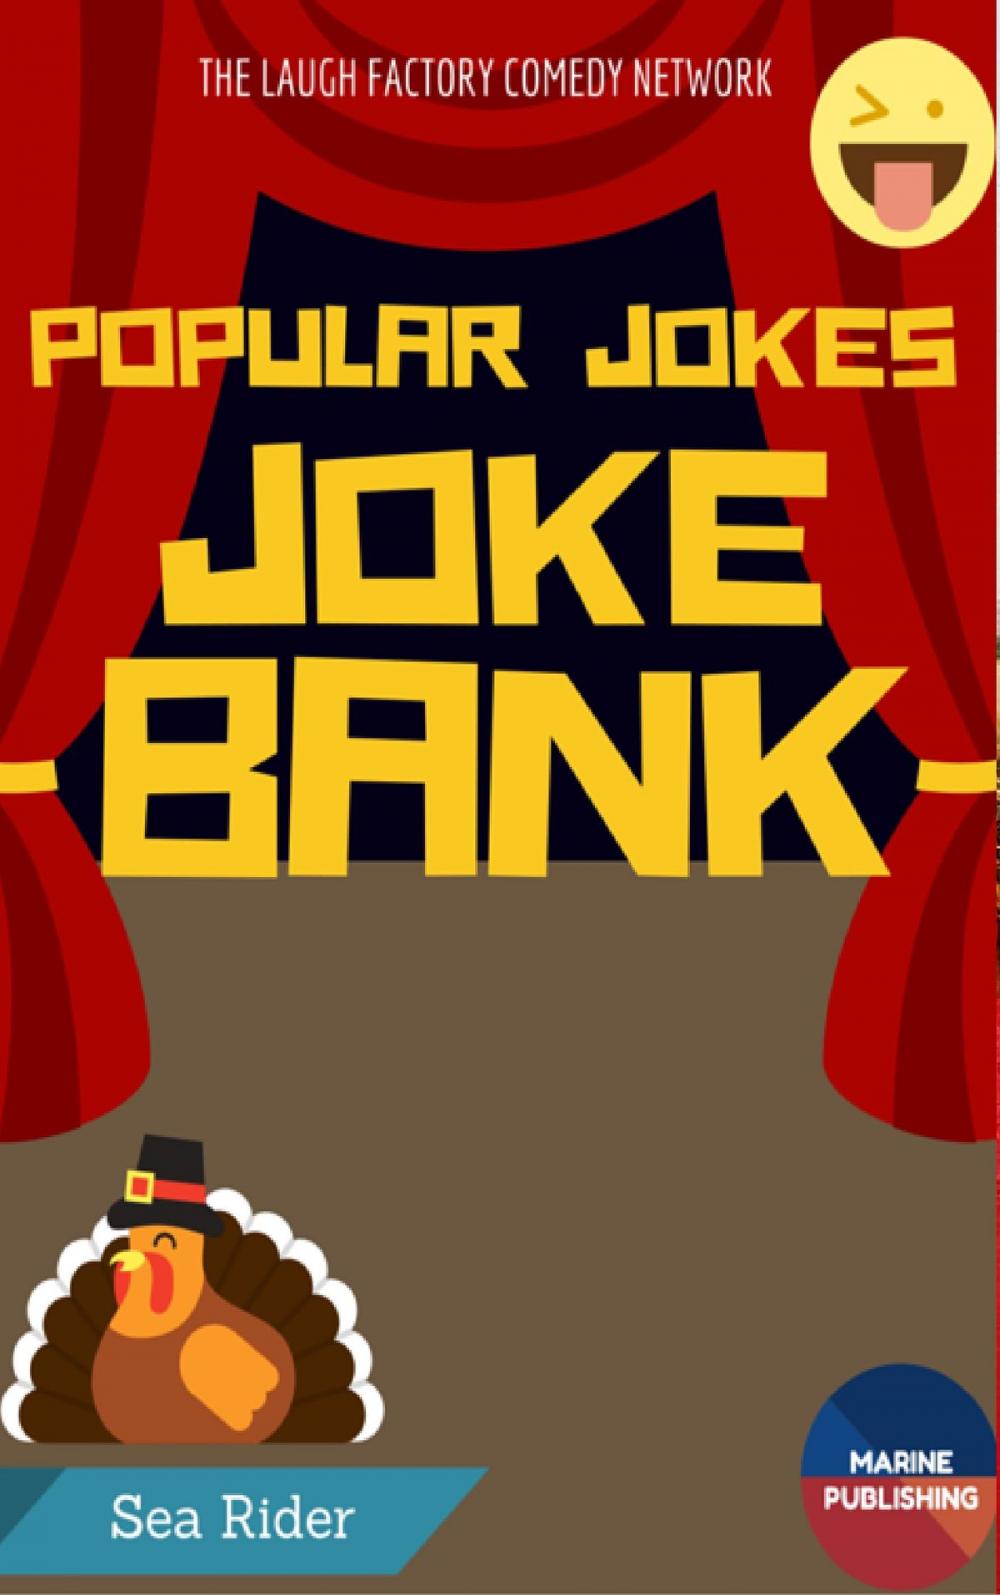 Big bigCover of joke bank - Popular Jokes